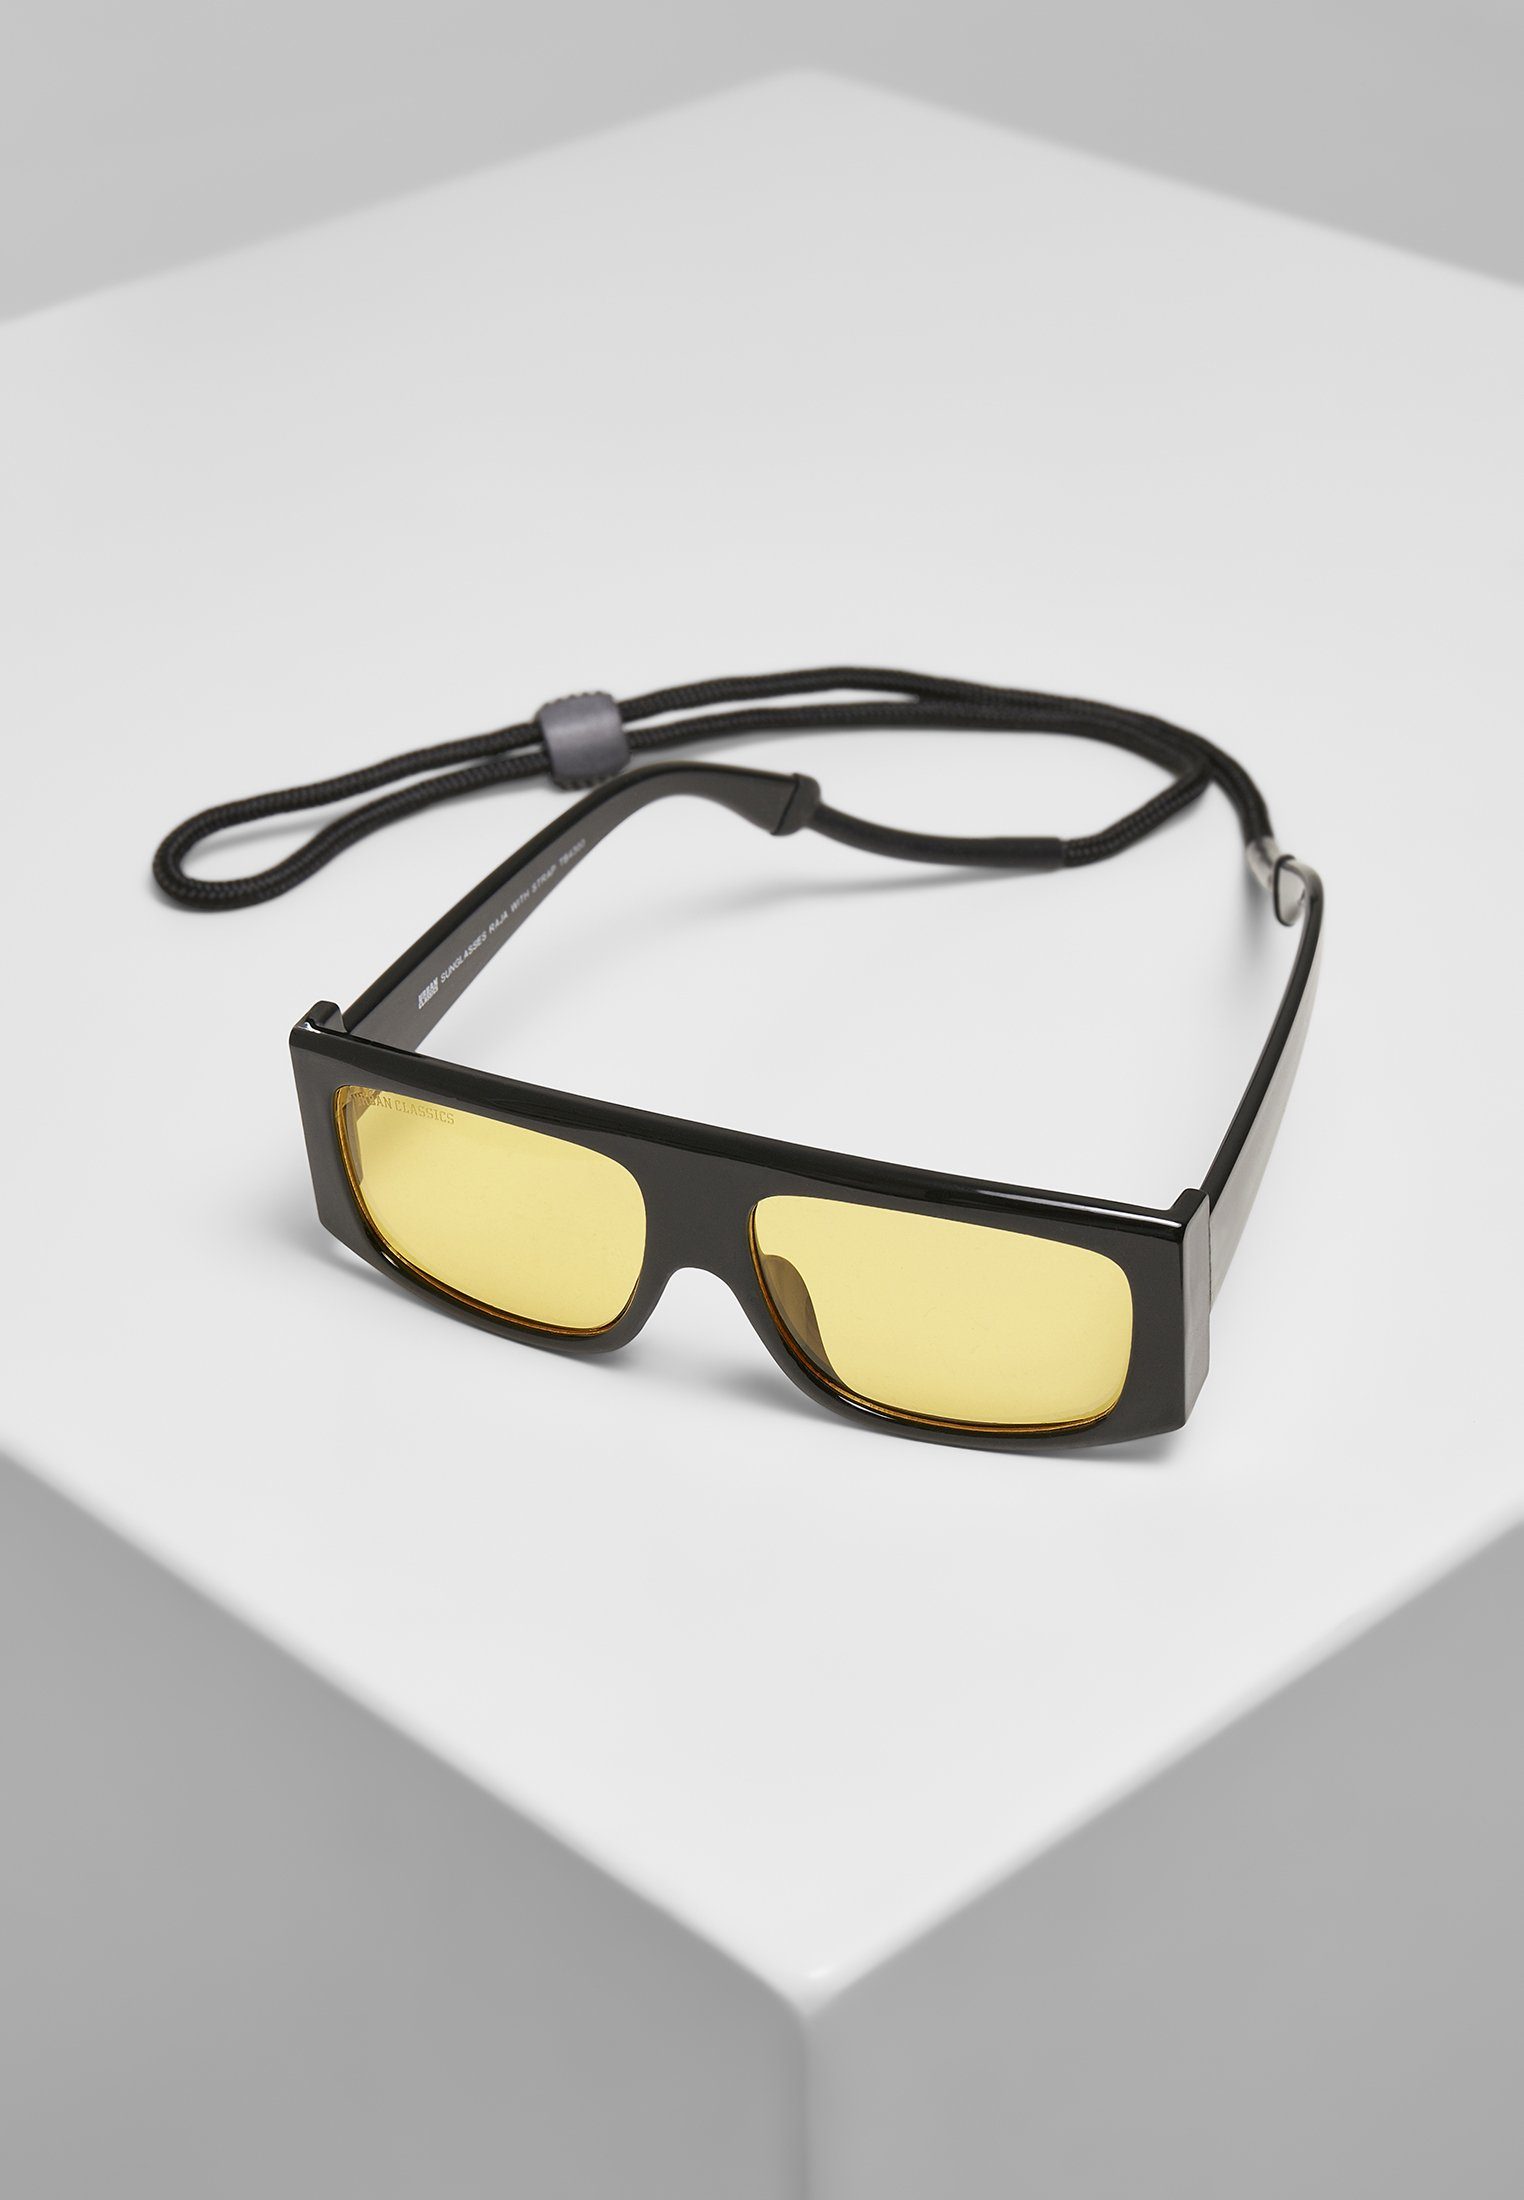 Raja with Sonnenbrille CLASSICS Sunglasses Strap Unisex URBAN